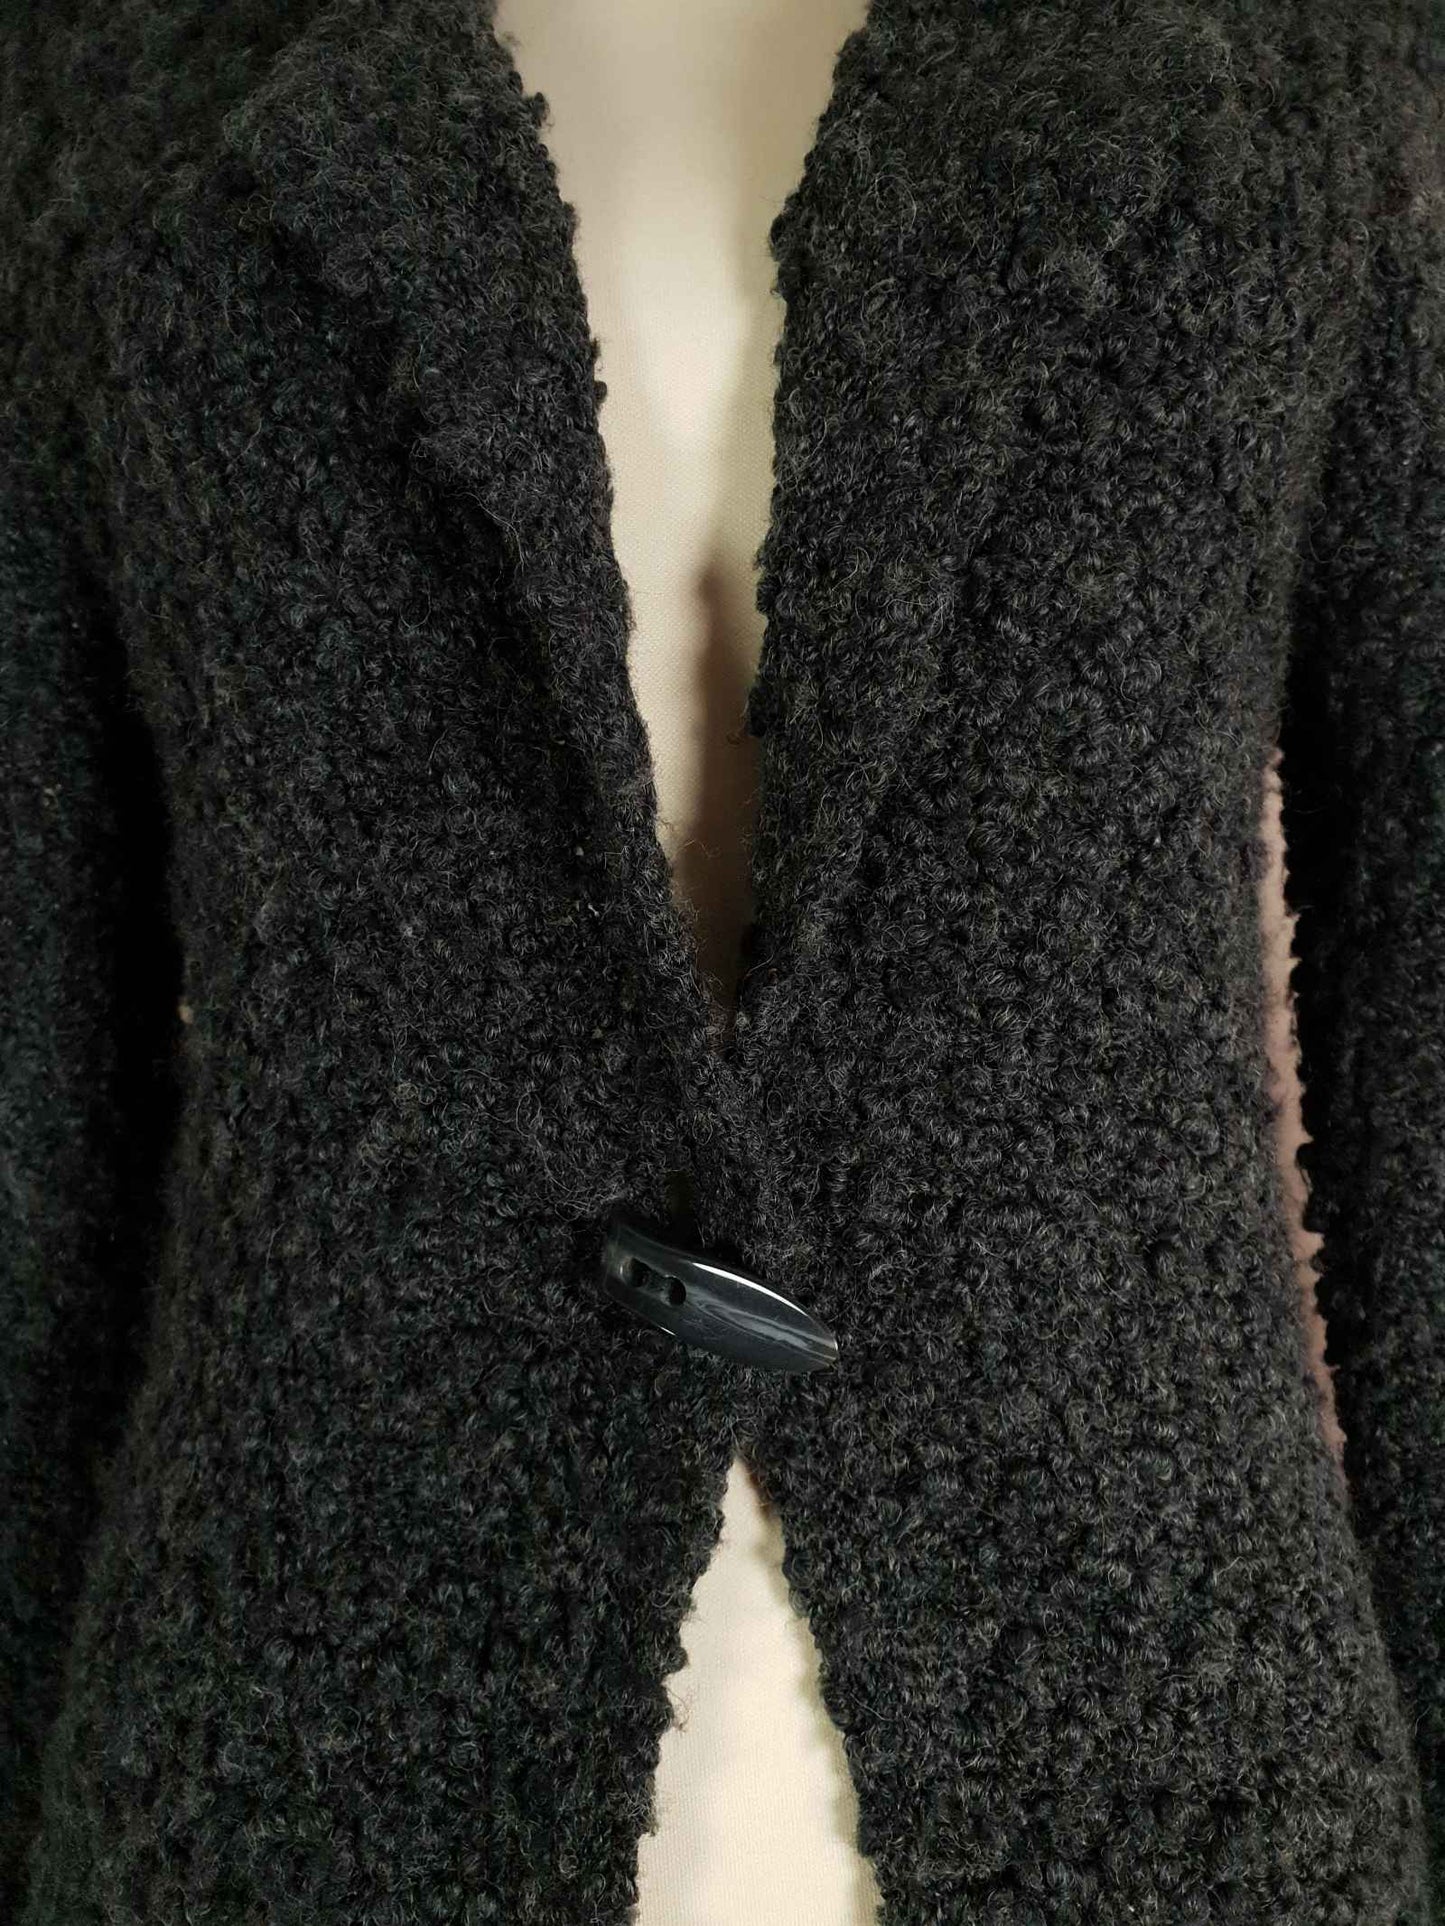 Vintage Boucle Cardigan Coat Dark Grey Size 12